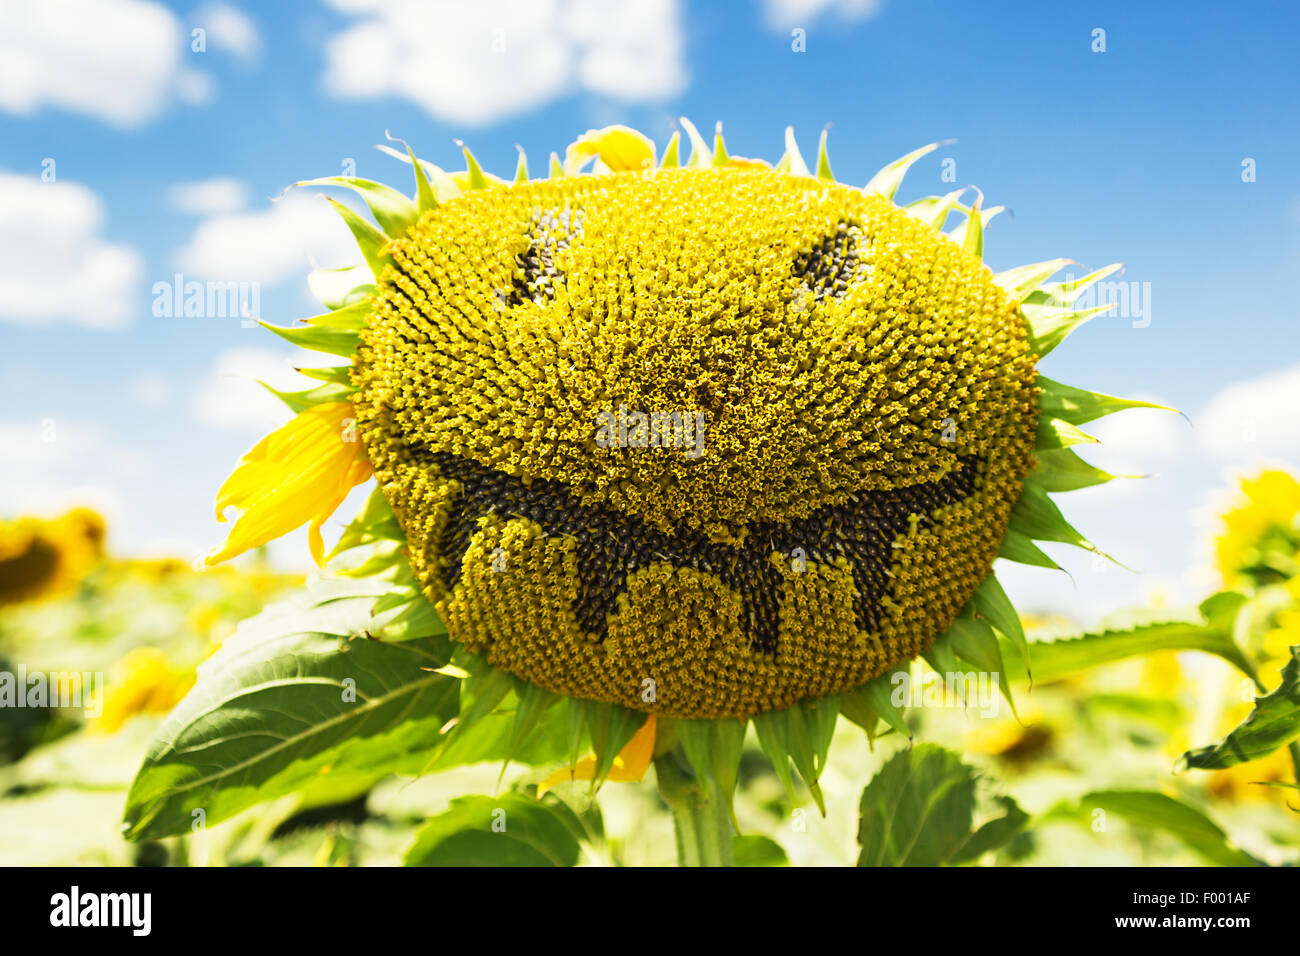 Sunflower face, close up photo Stock Photo